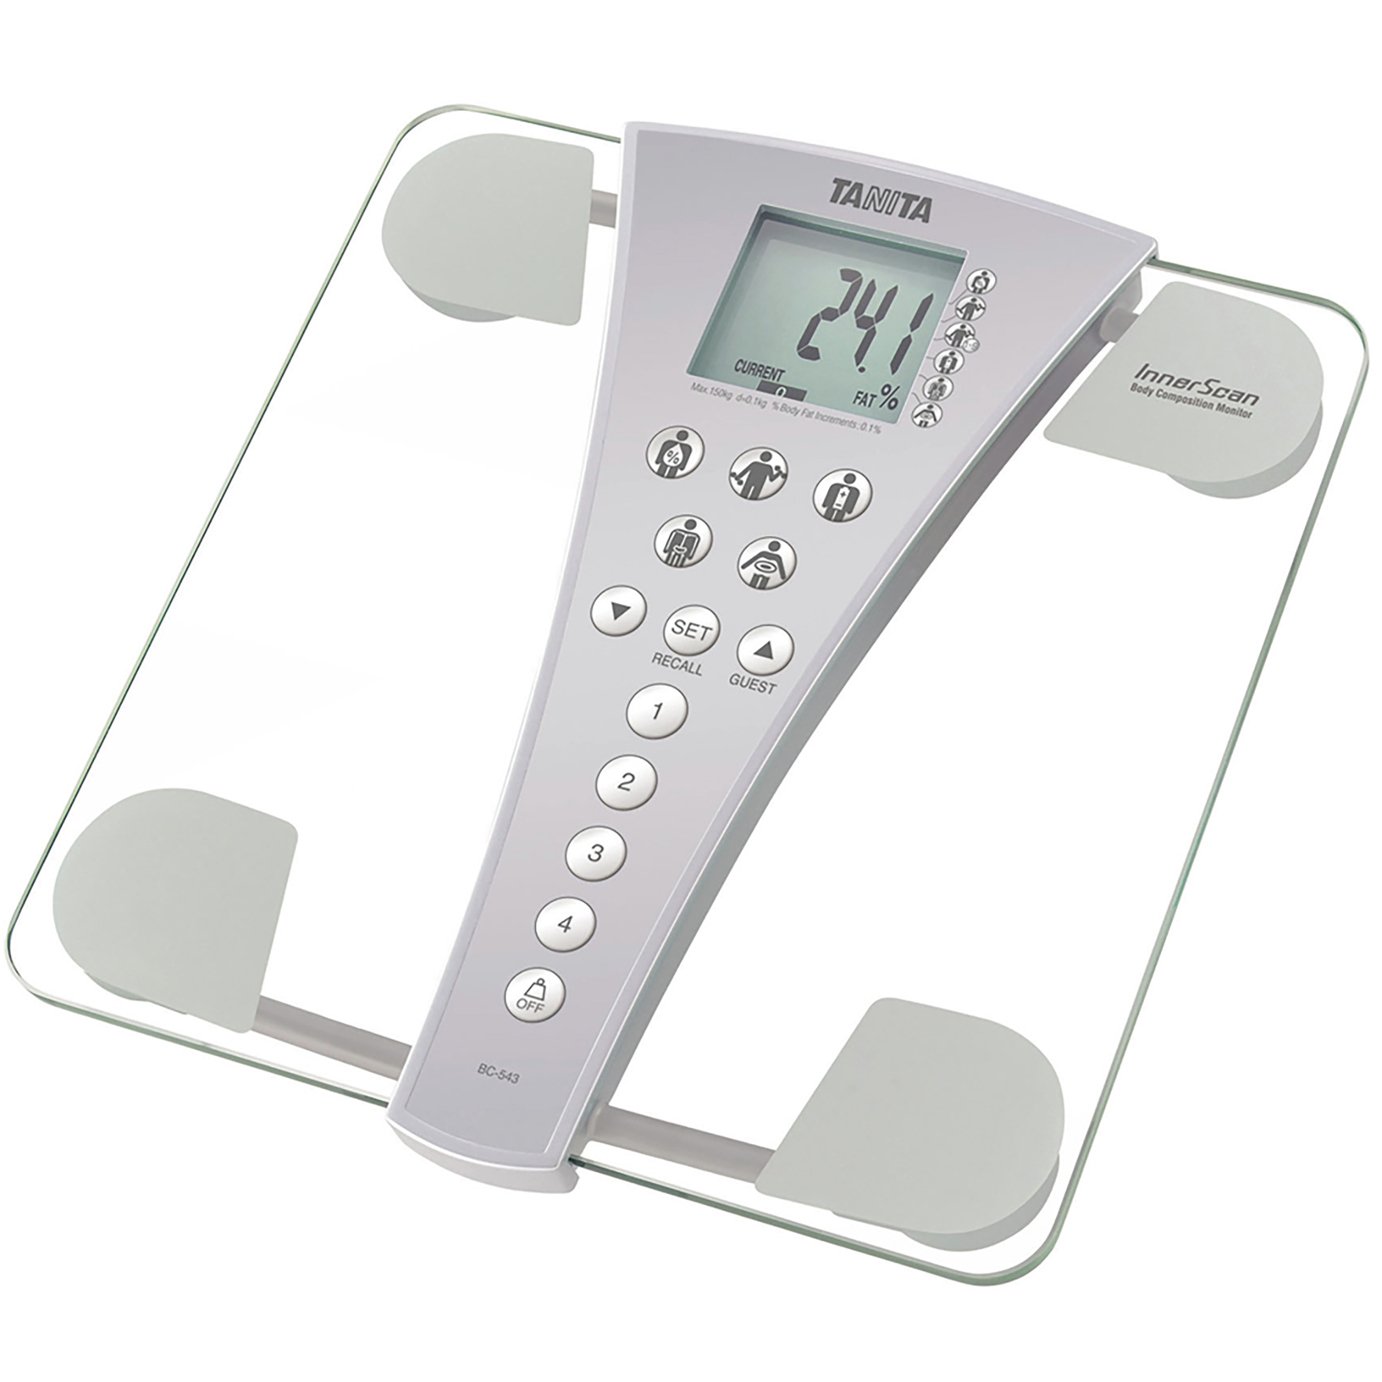 Tanita BC543 Family Health Body Analyser Bathroom Scales